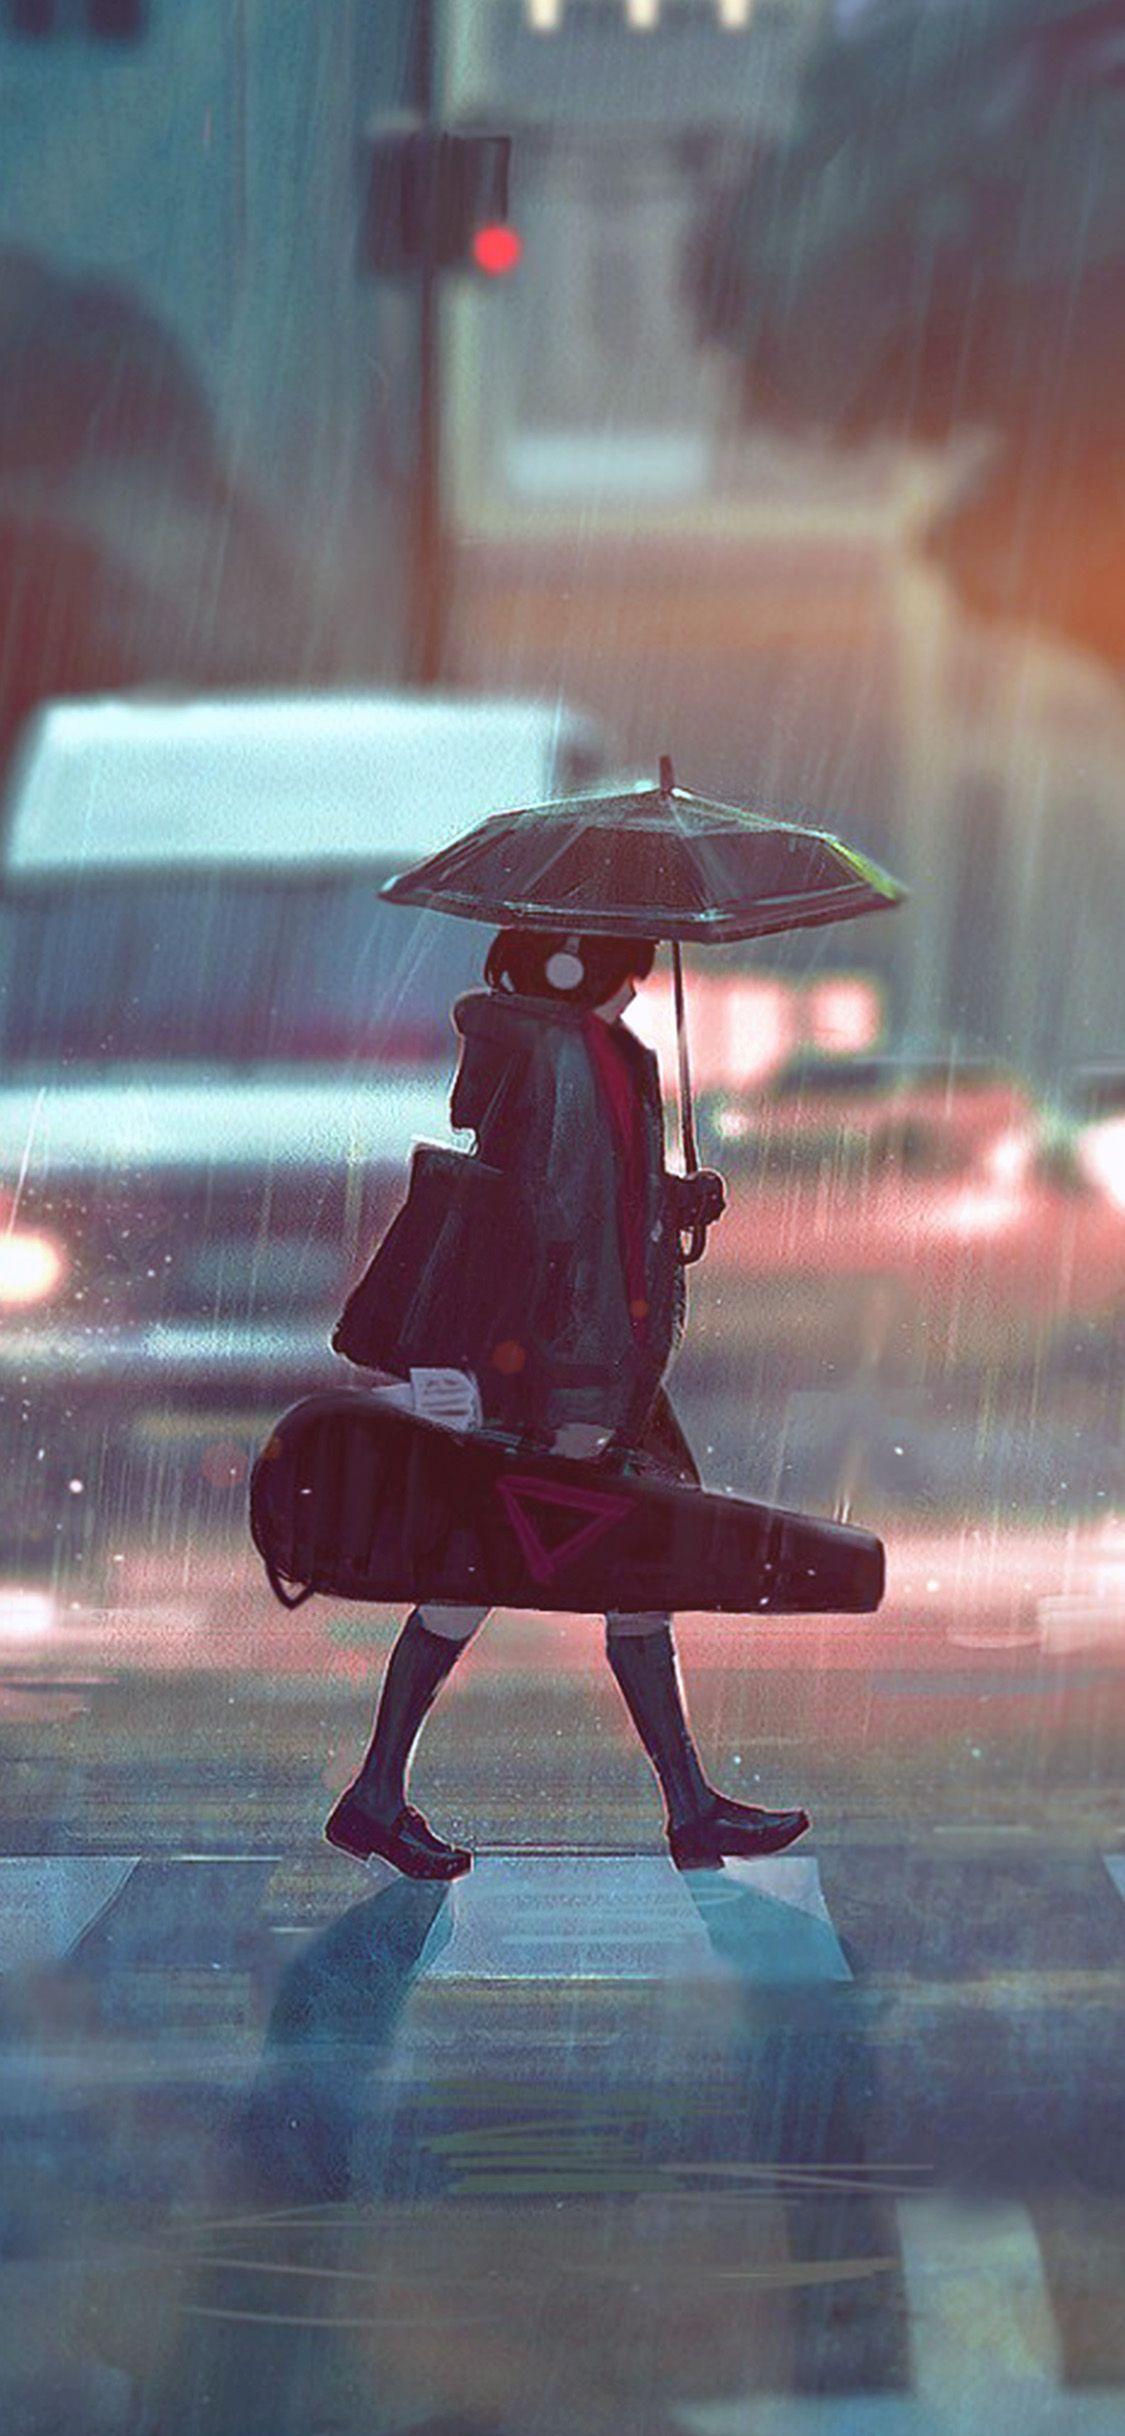 iPhoneX wallpaper: rainy day anime paint girl art